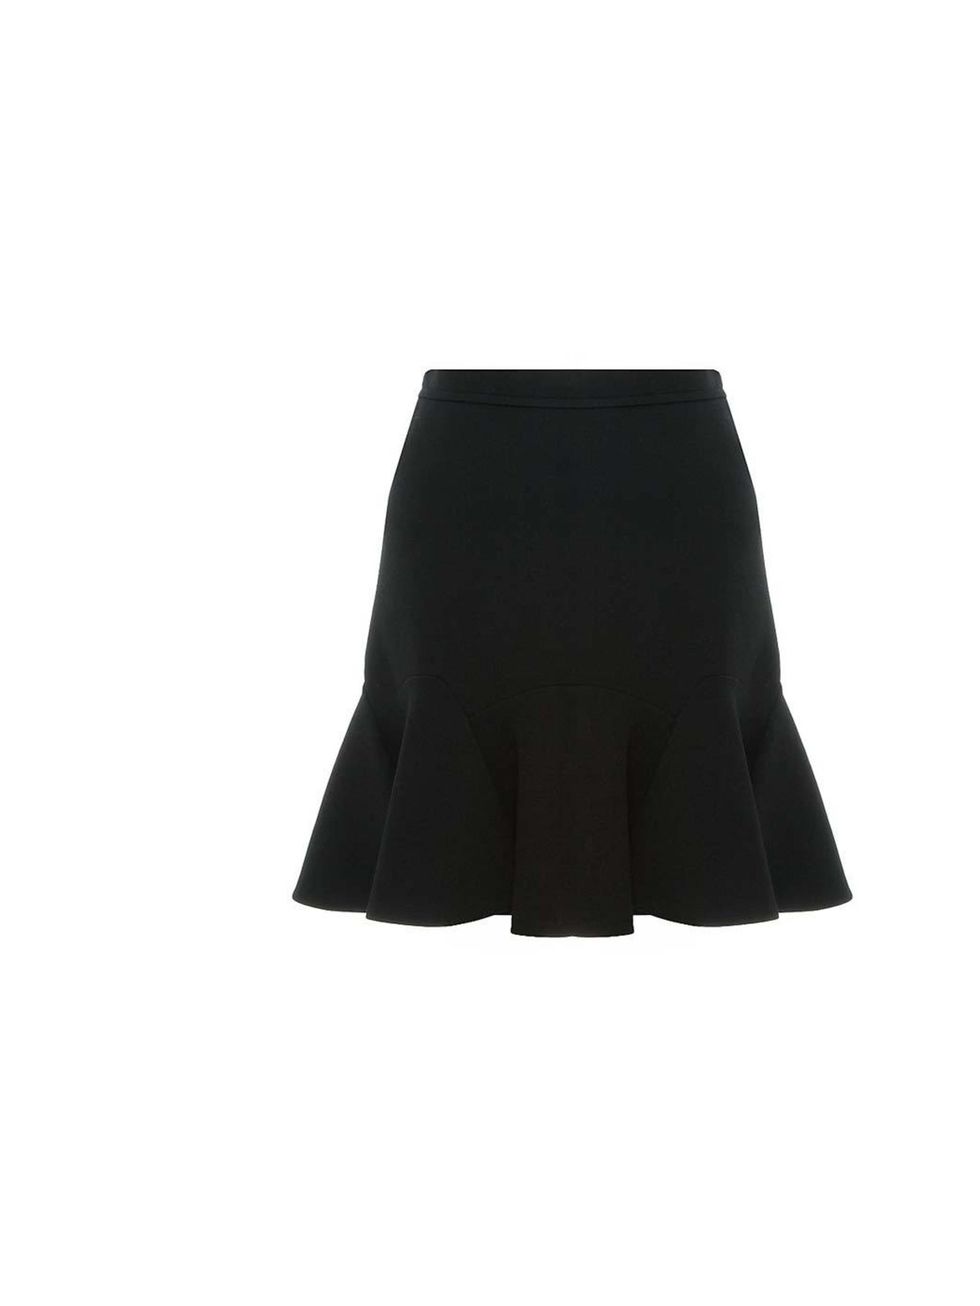 <p>Carven Frill Hem Skirt at Harrods, £260</p><p><a href="http://www.harrods.com/product/frill-hem-skirt/carven/000000000003031746">BUY NOW</a></p>